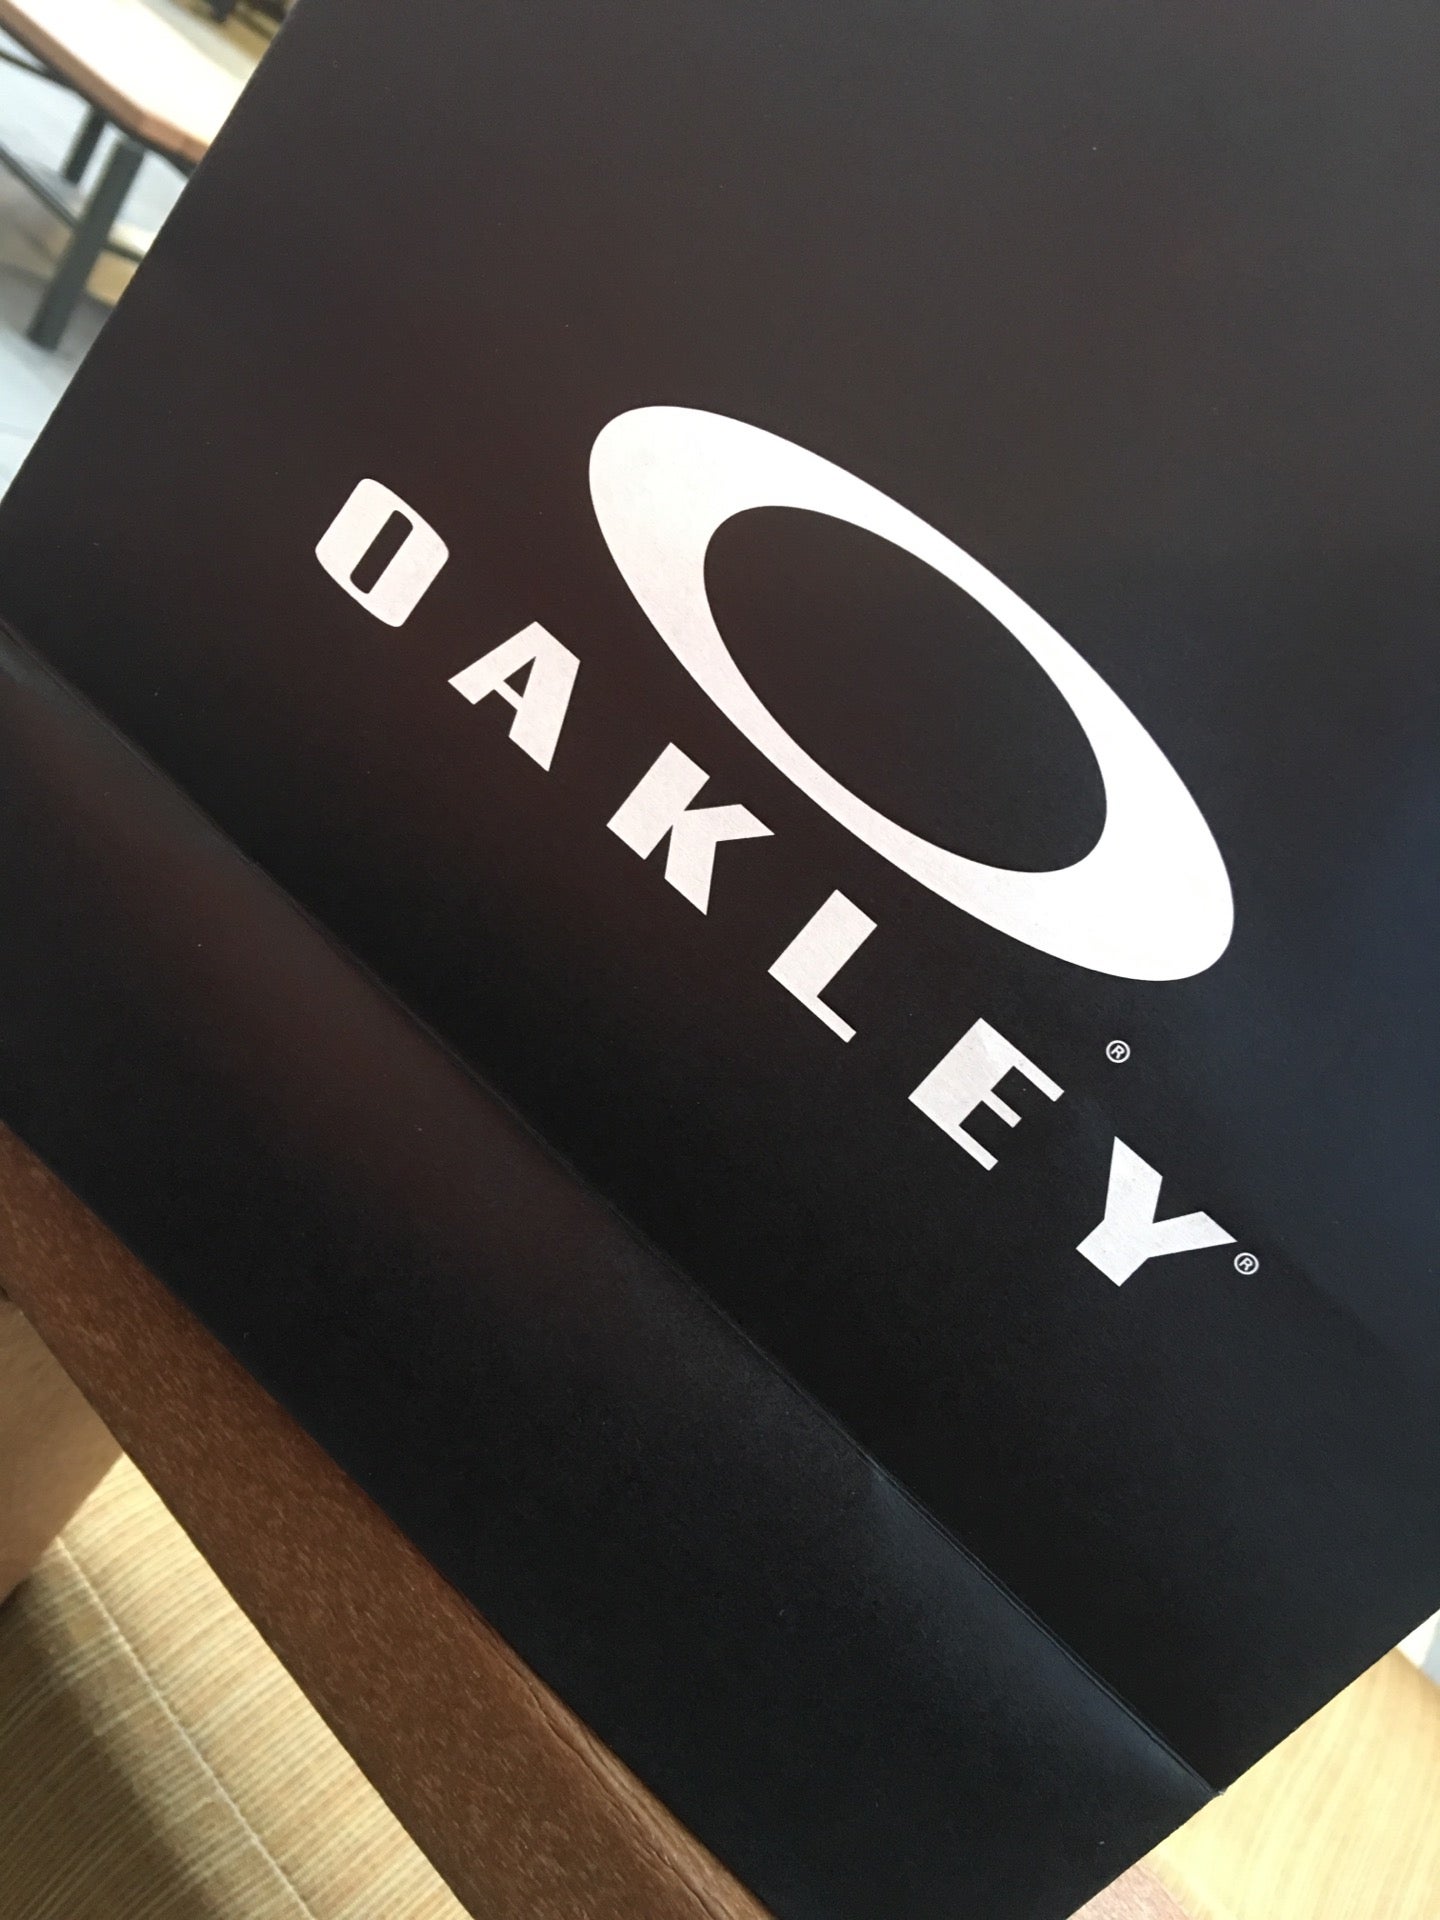 Oakley Vault, 18 Lightcap Rd Pottstown, PA  Men's and Women's Sunglasses,  Goggles, & Apparel